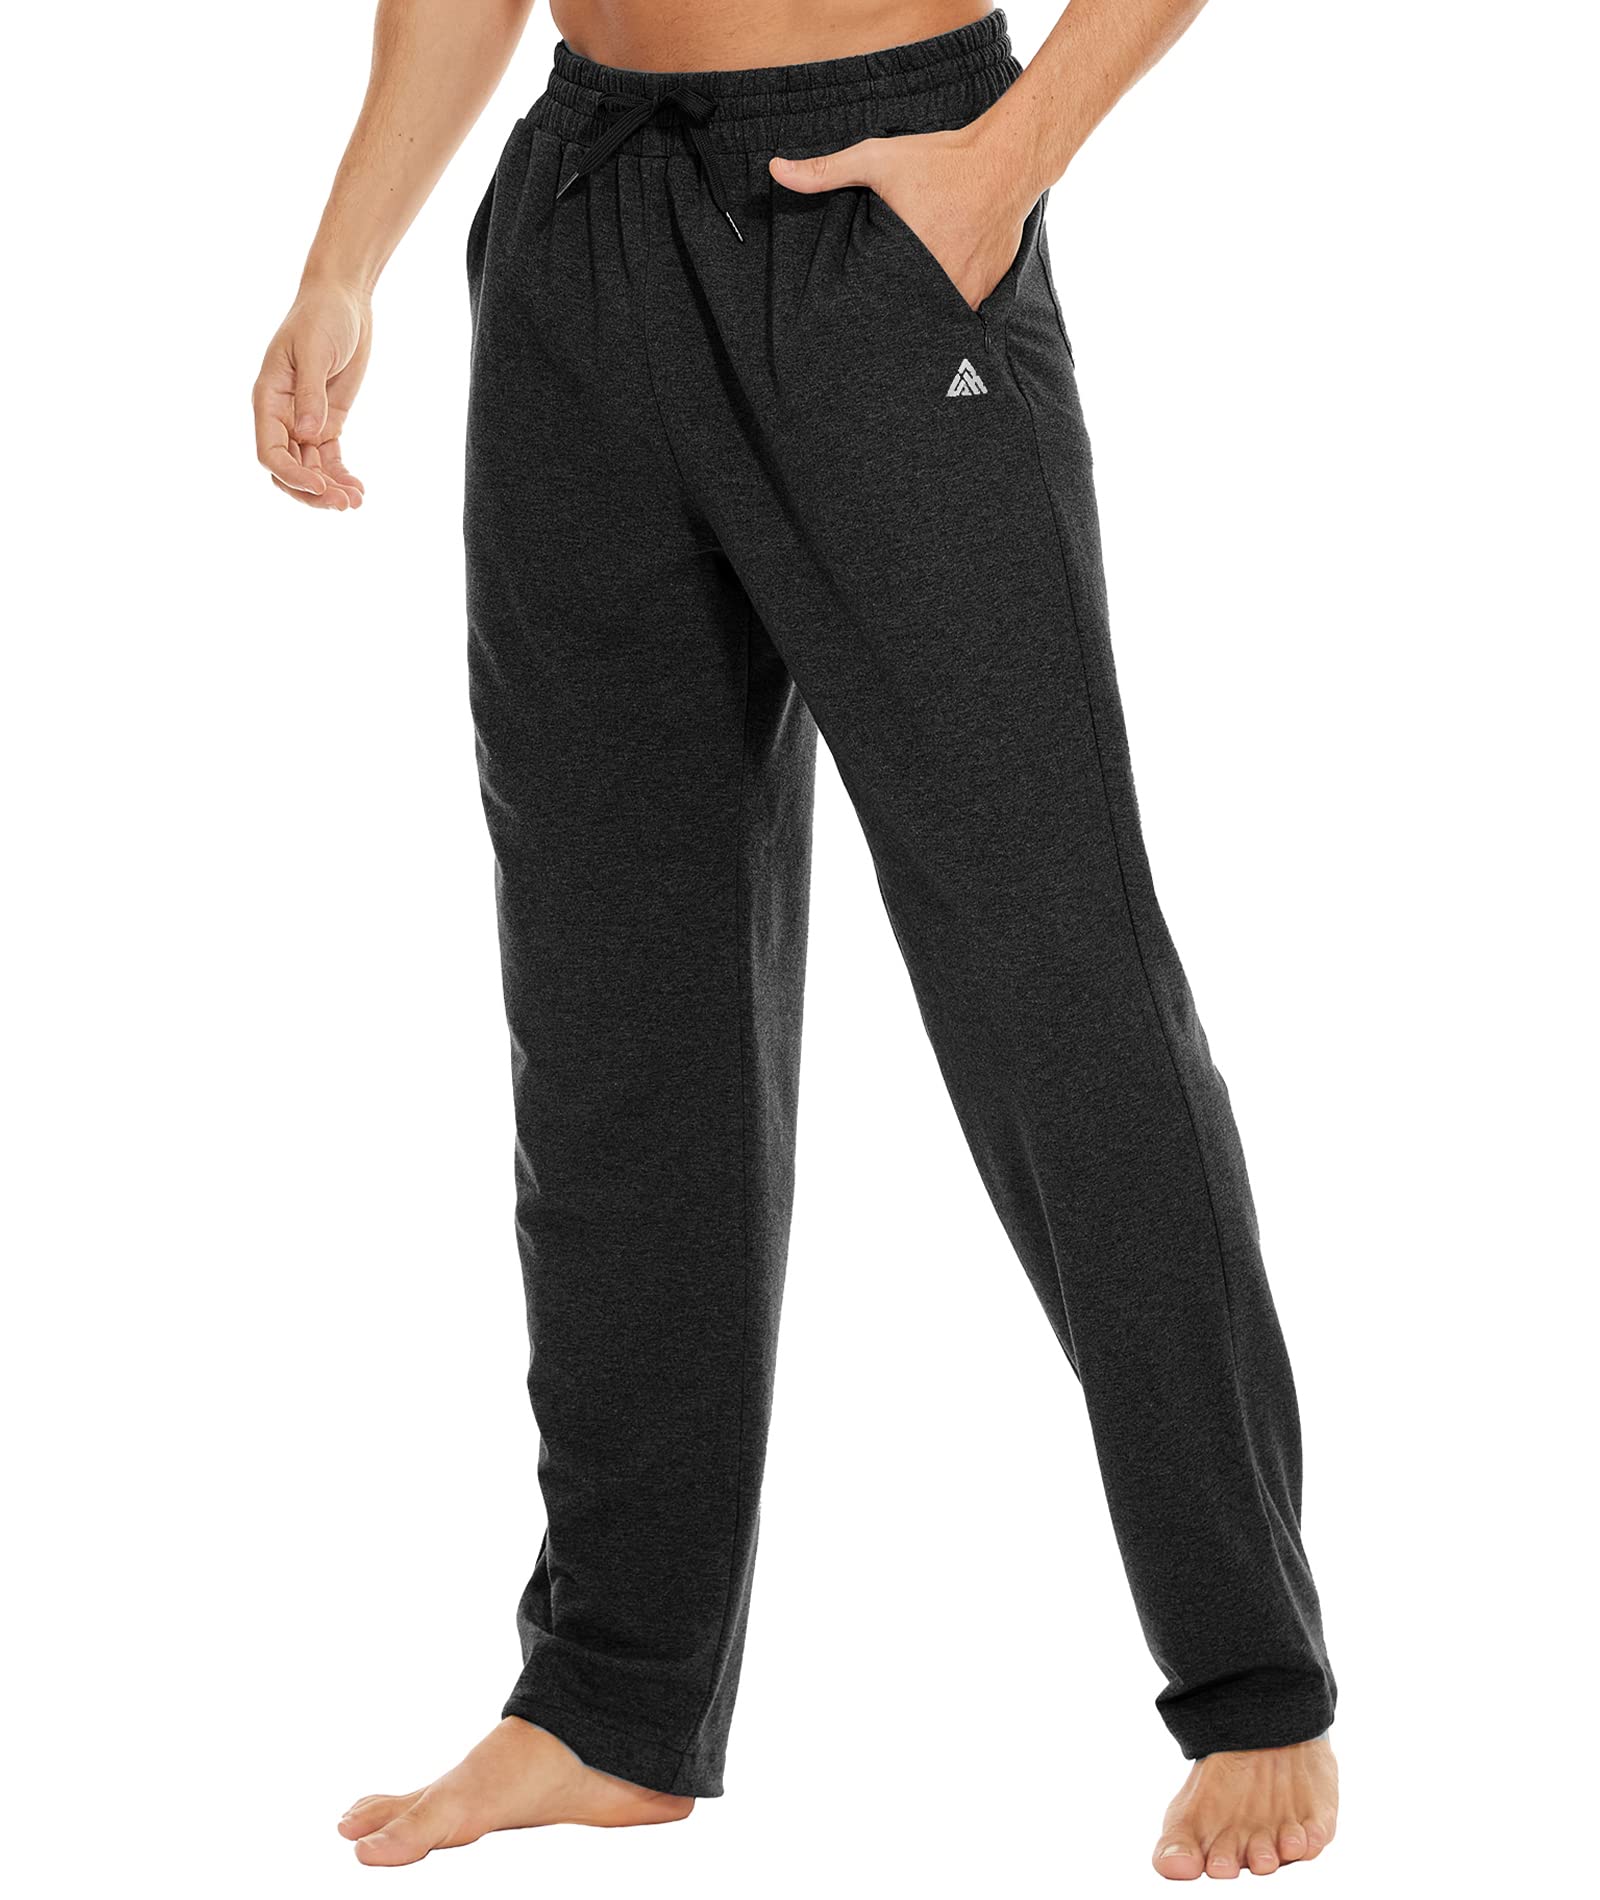 JACKETOWN Men's Cotton Yoga Pants Athletic Lounge Loose Fit Sweatpants  Running Jersey Pants with Zipper Pockets Straight Leg Black Medium